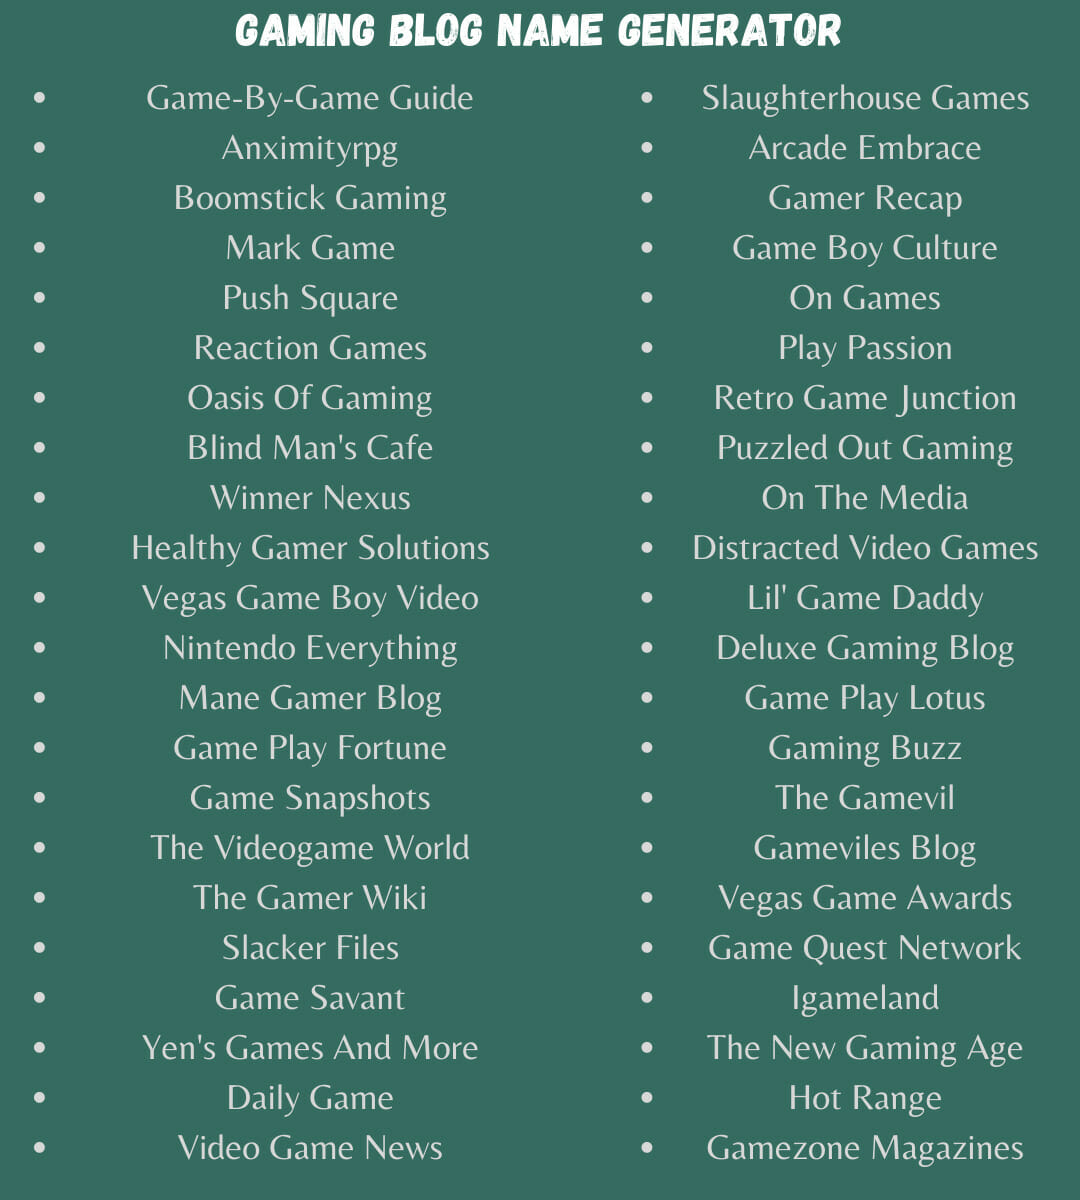 Gaming Blog Names